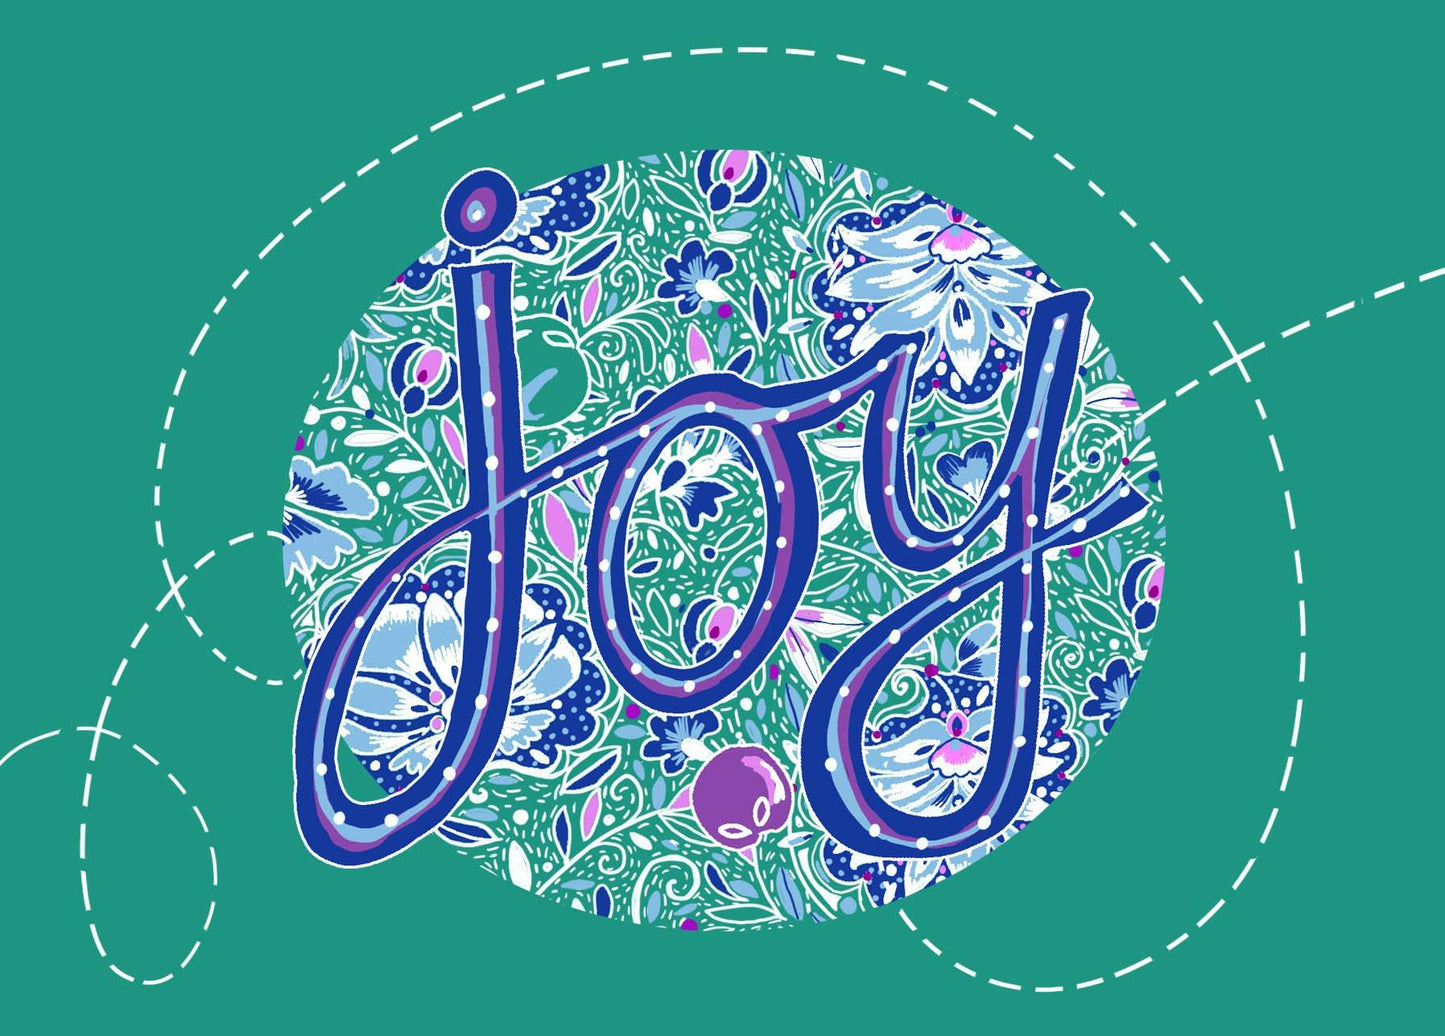 "Joy" by Emily Kelly - Print